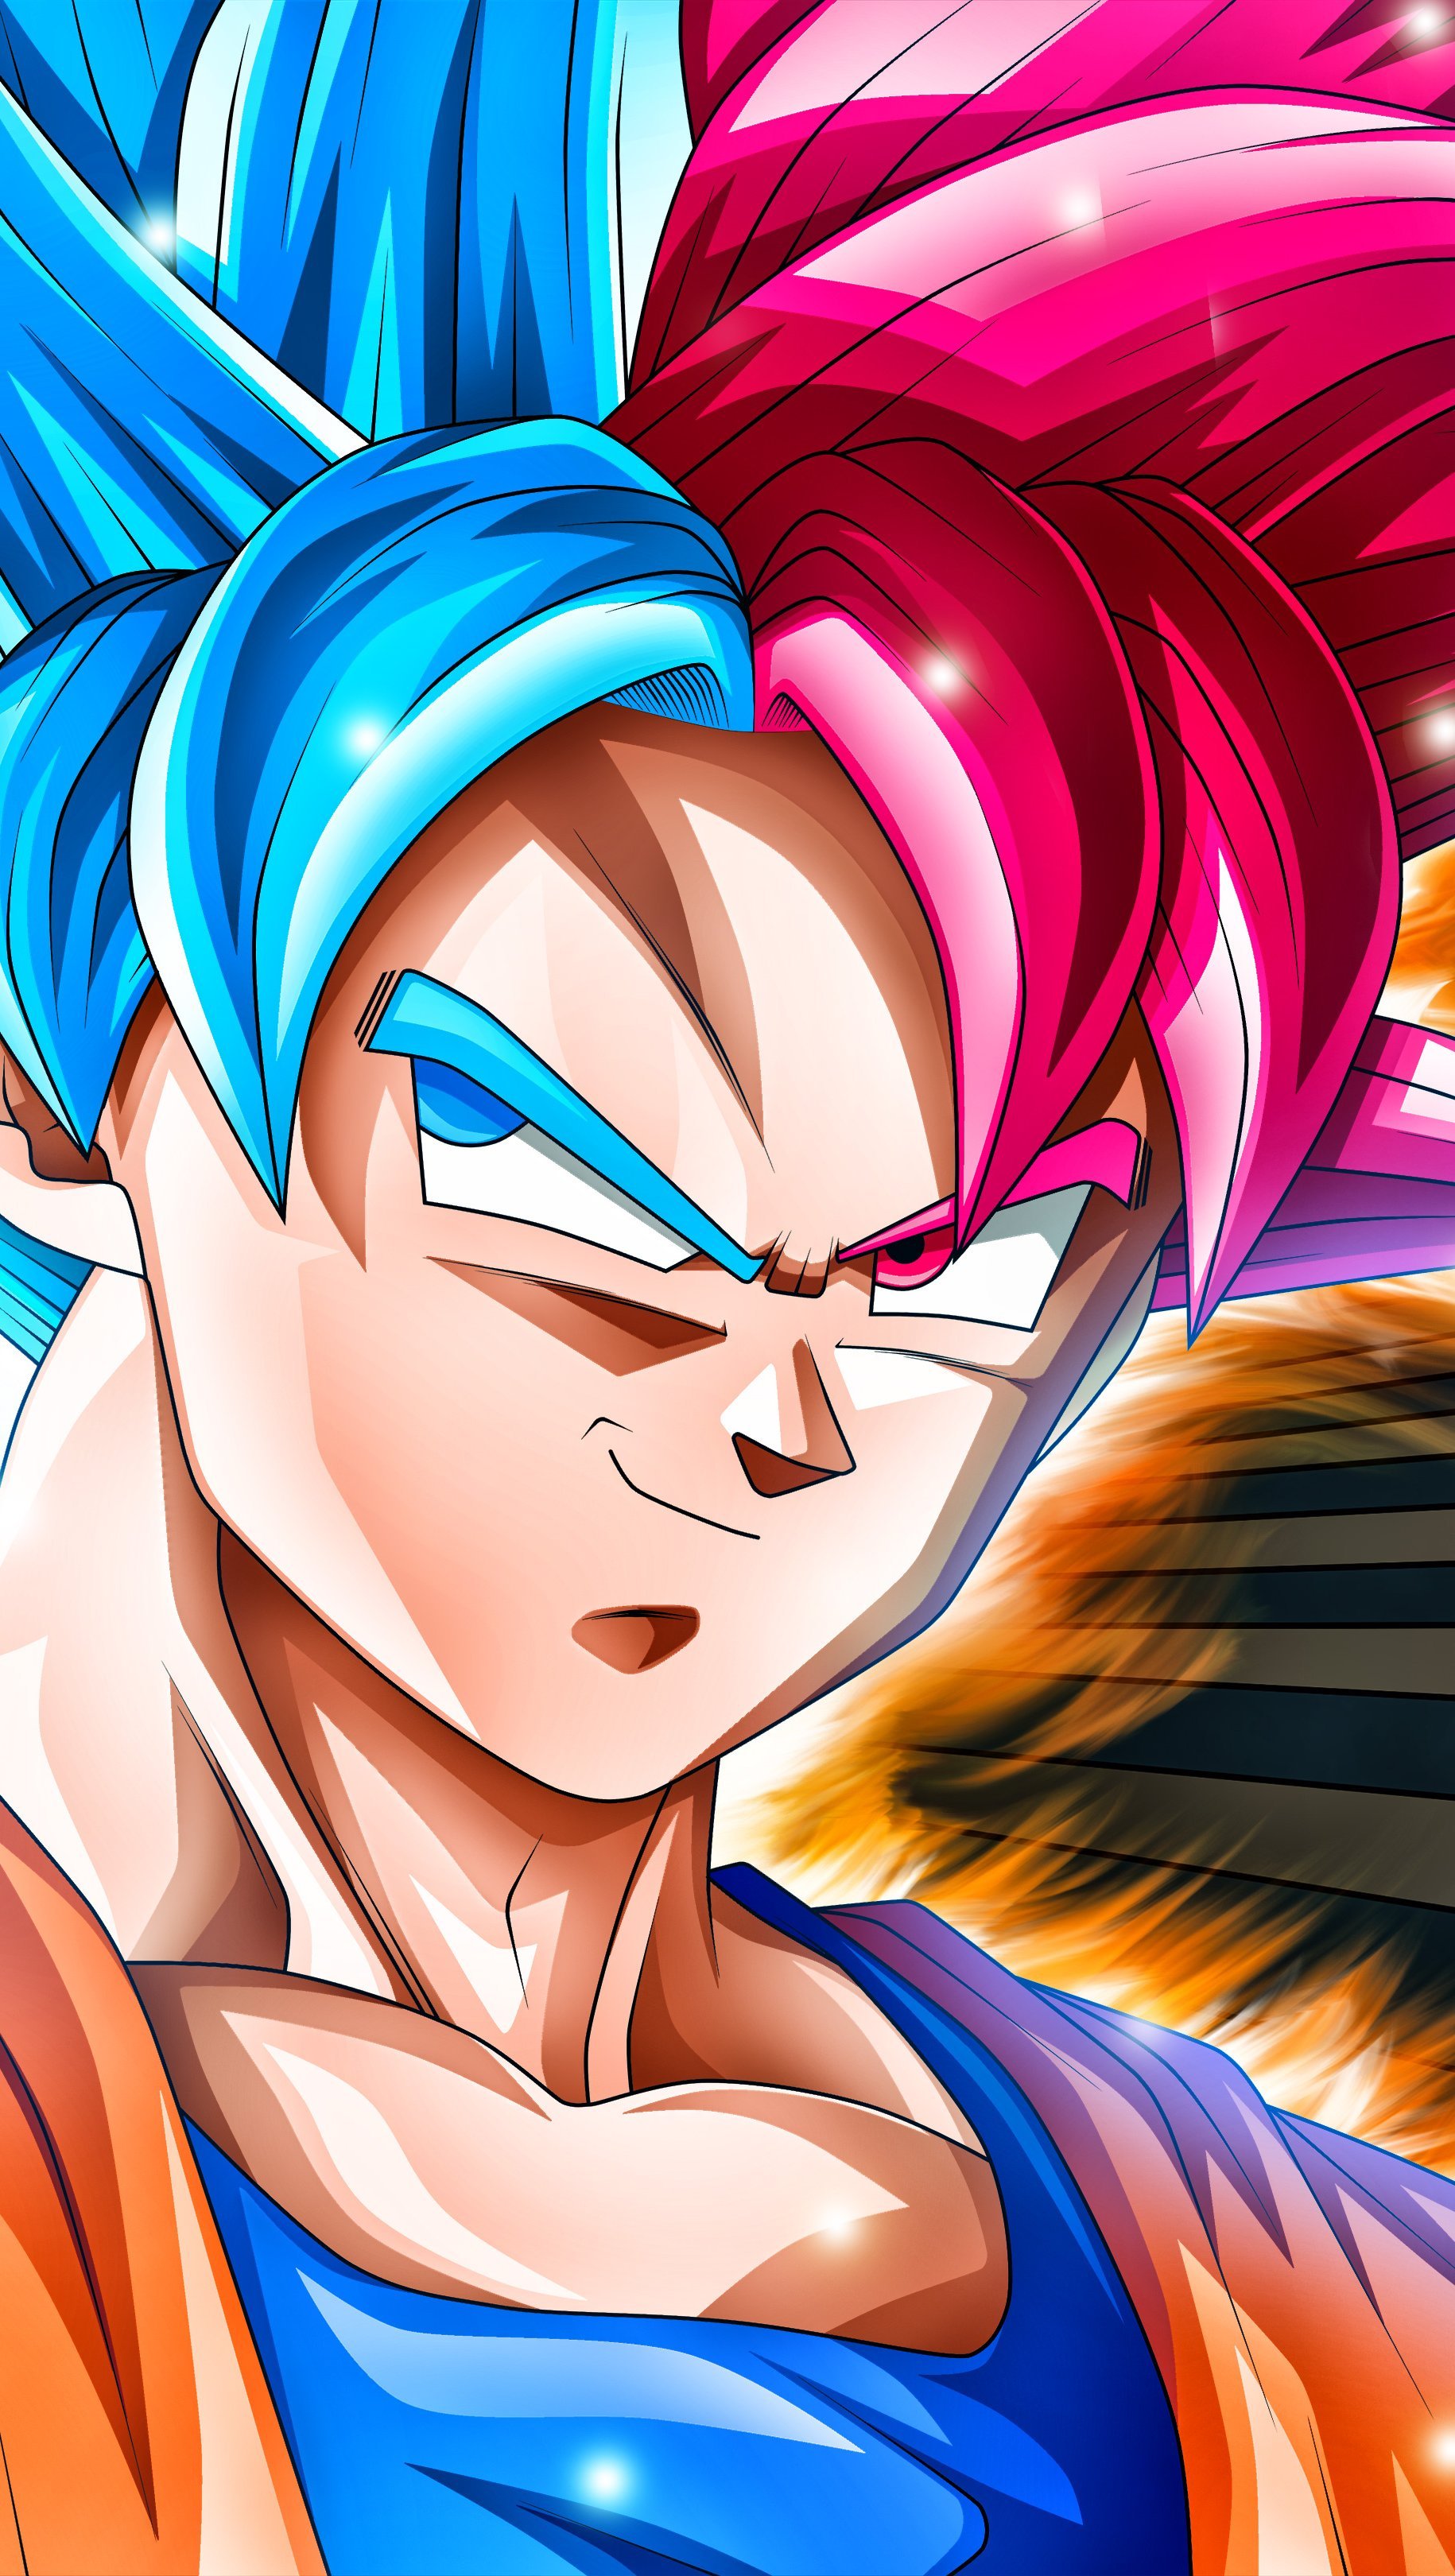 Fondos de pantalla Anime Goku Super Saiyan Blue and Black Goku SSR Dragon Ball Super Vertical